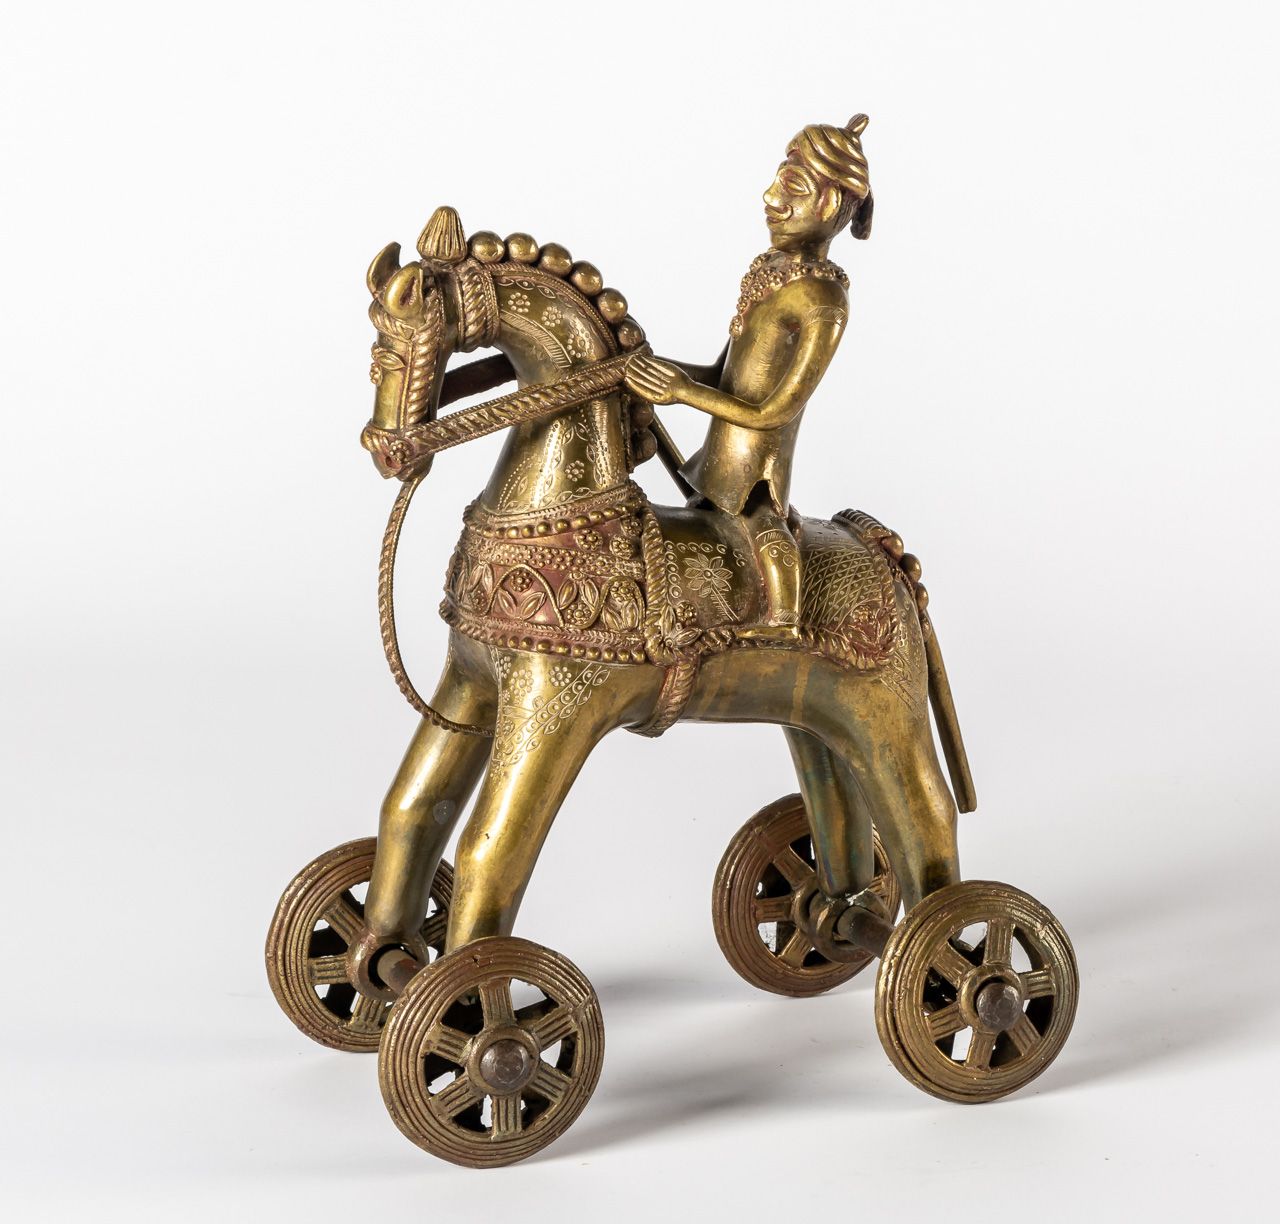 KRIEGER AUF PFERD 印度（？），黄铜，可能是20世纪上半叶。

25,5 x 34 x 18厘米



骑马的勇士

印度（？），黄铜，大概是2&hellip;